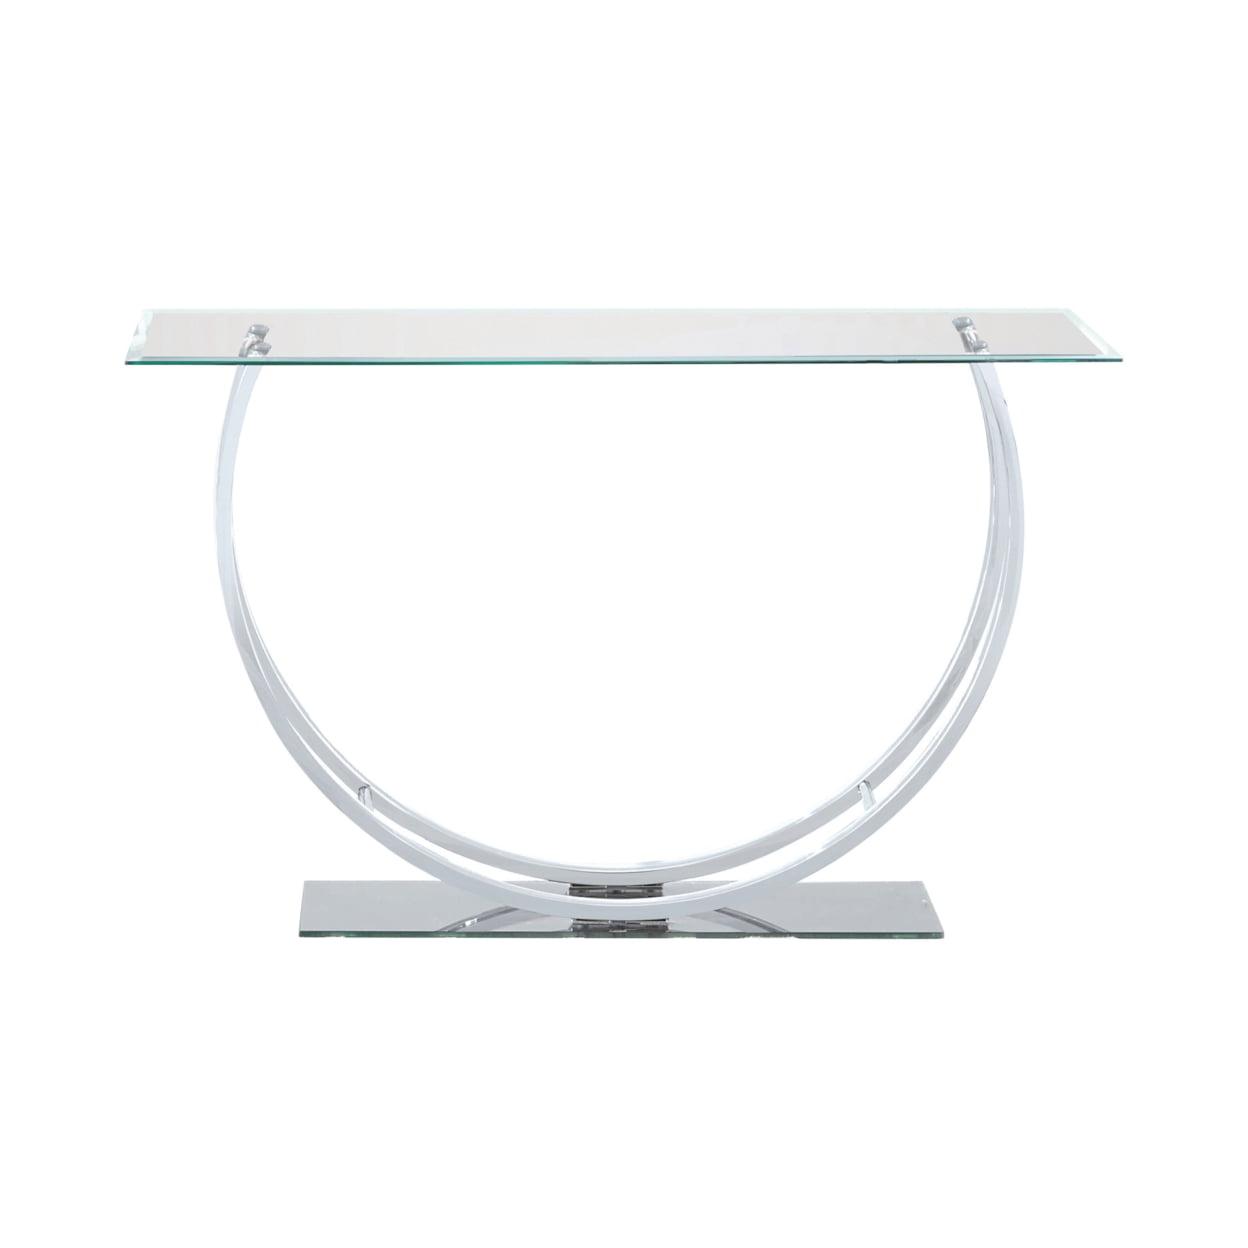 Elegant U-Shaped Chrome and Glass Sofa Table with Mirrored Base